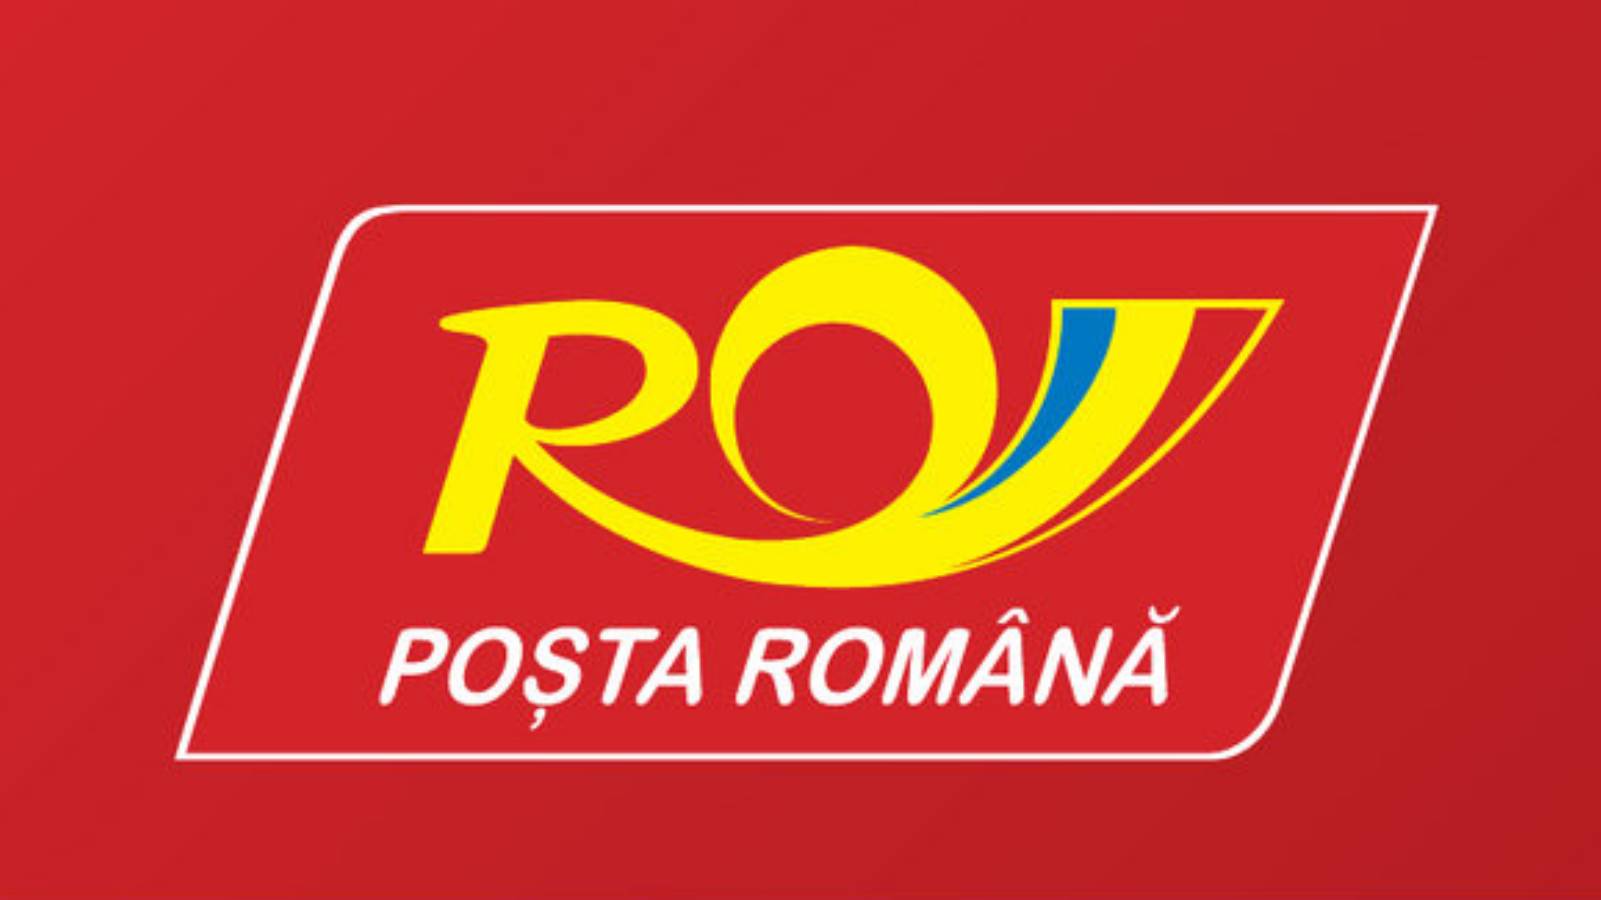 Posta Romana message Romanians